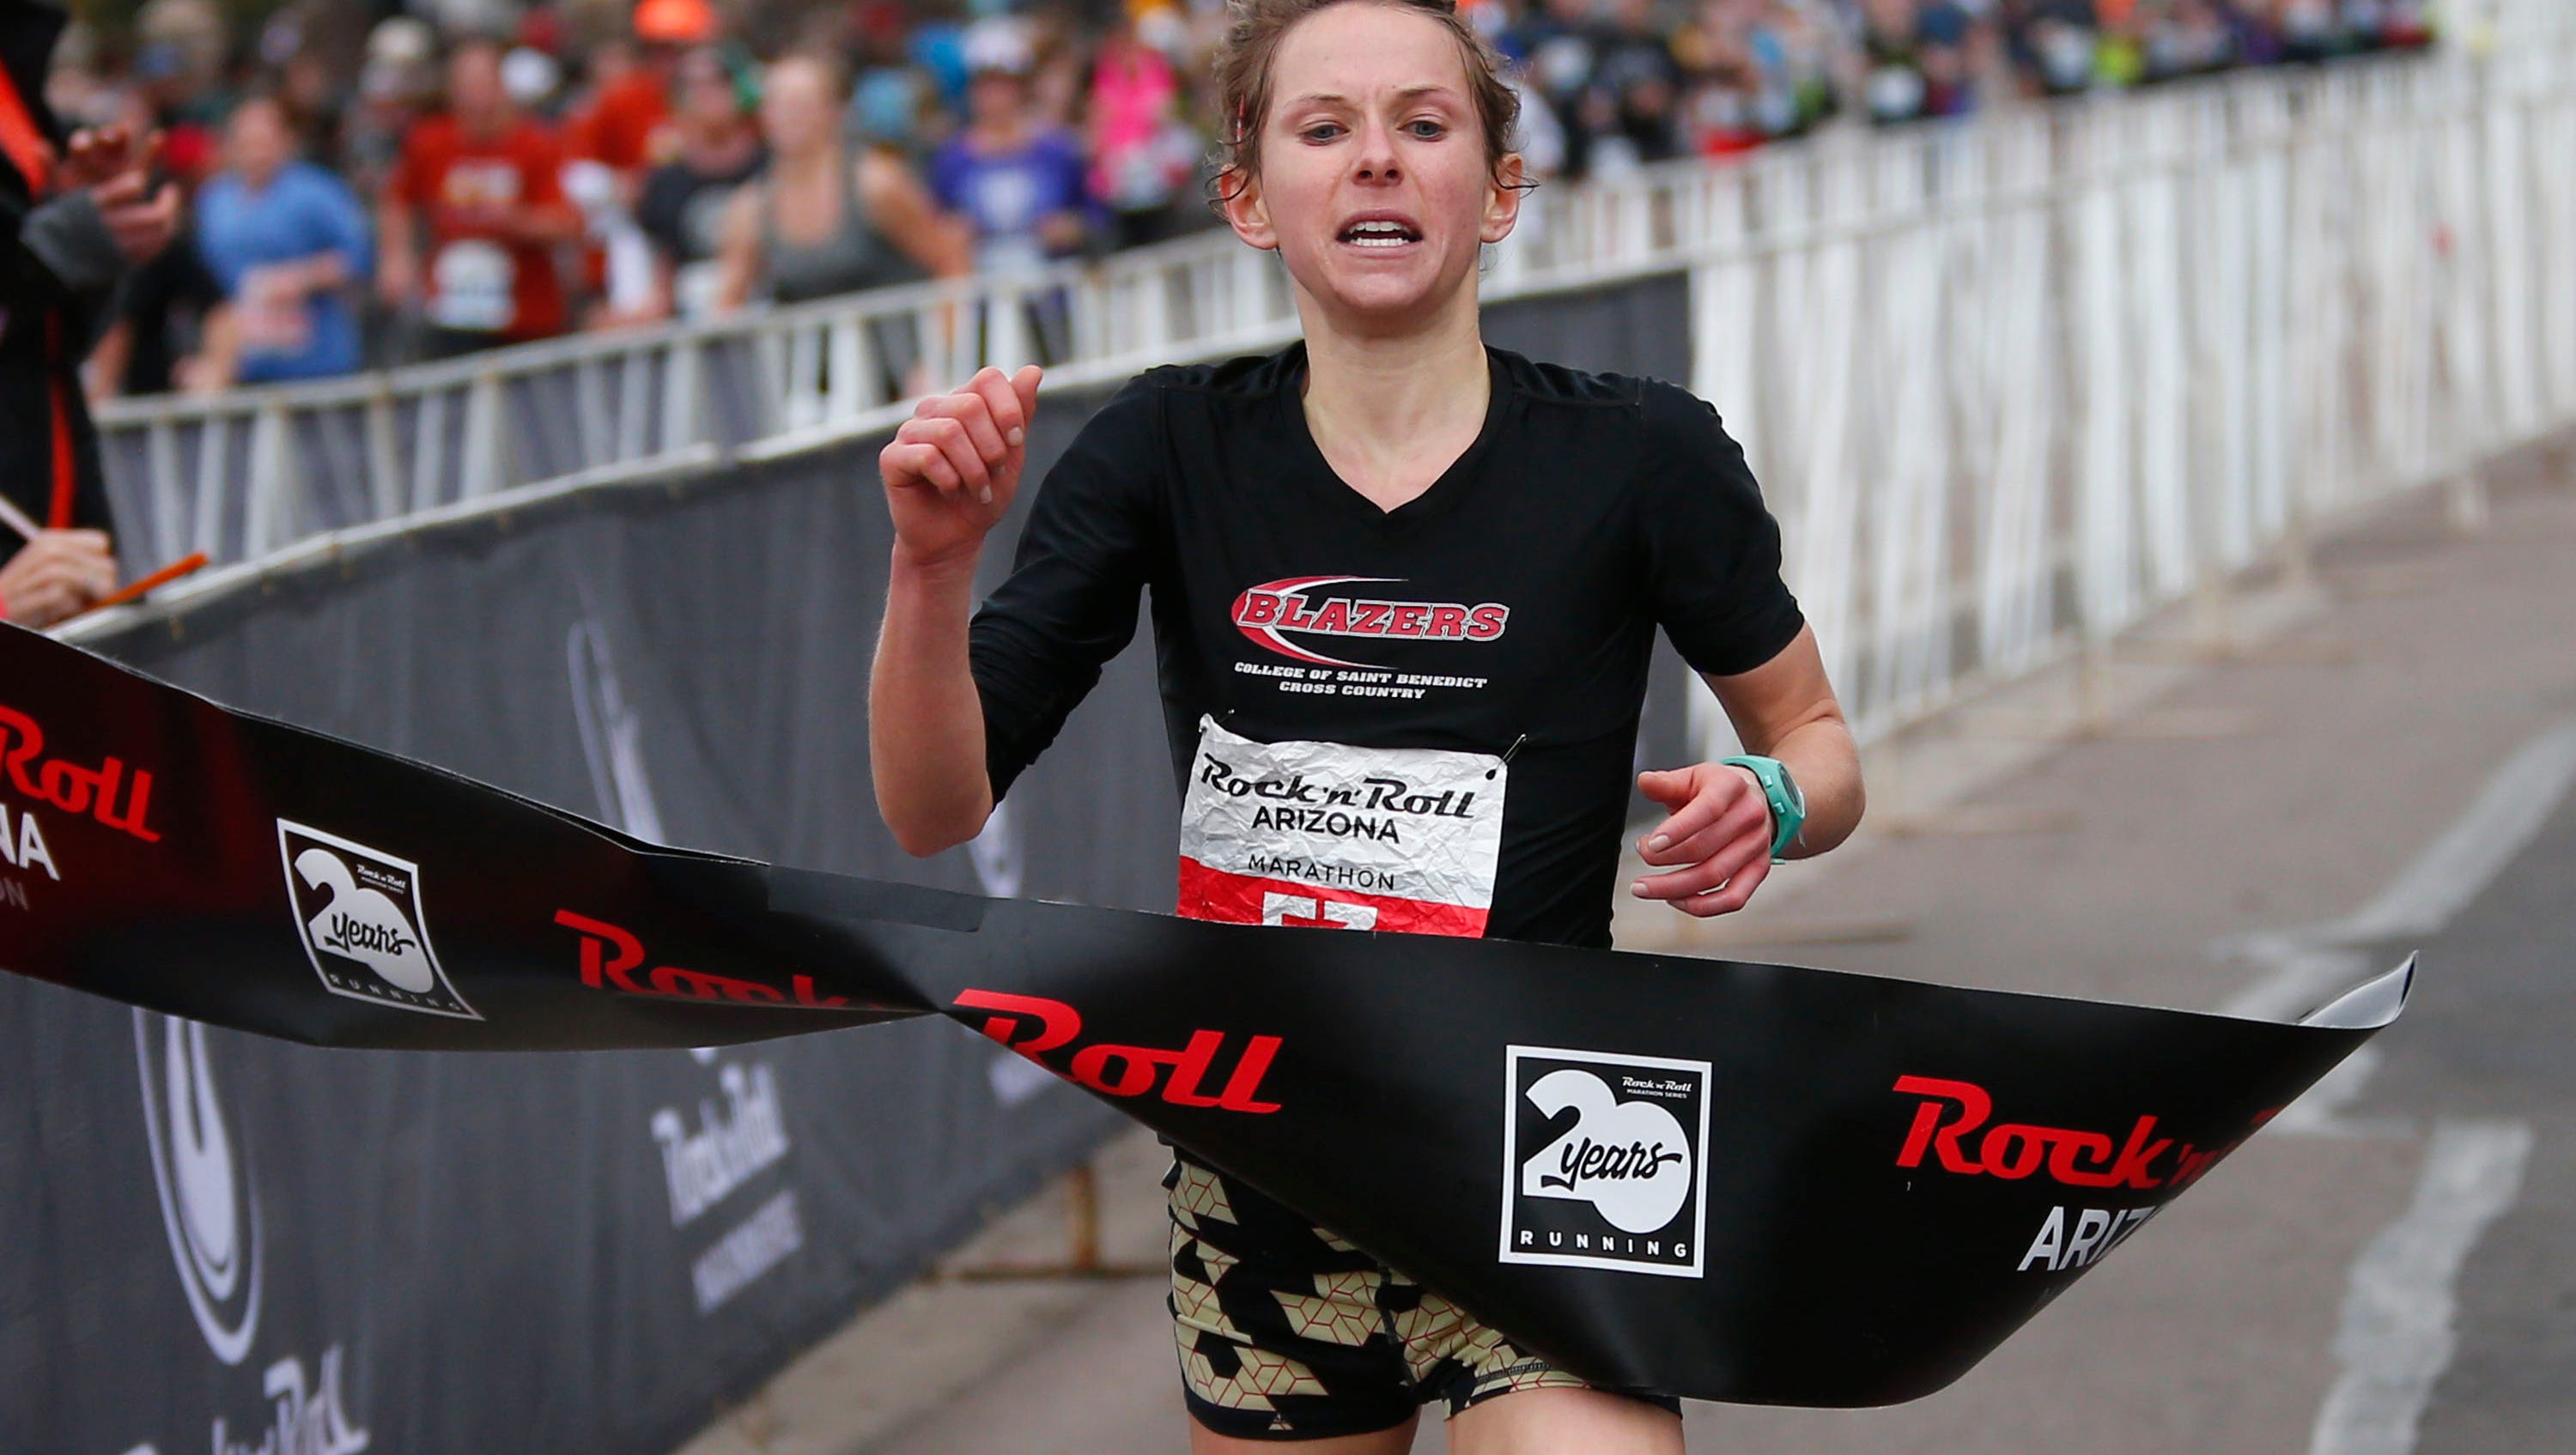 Results Rock 'n' Roll Arizona Marathon women's event